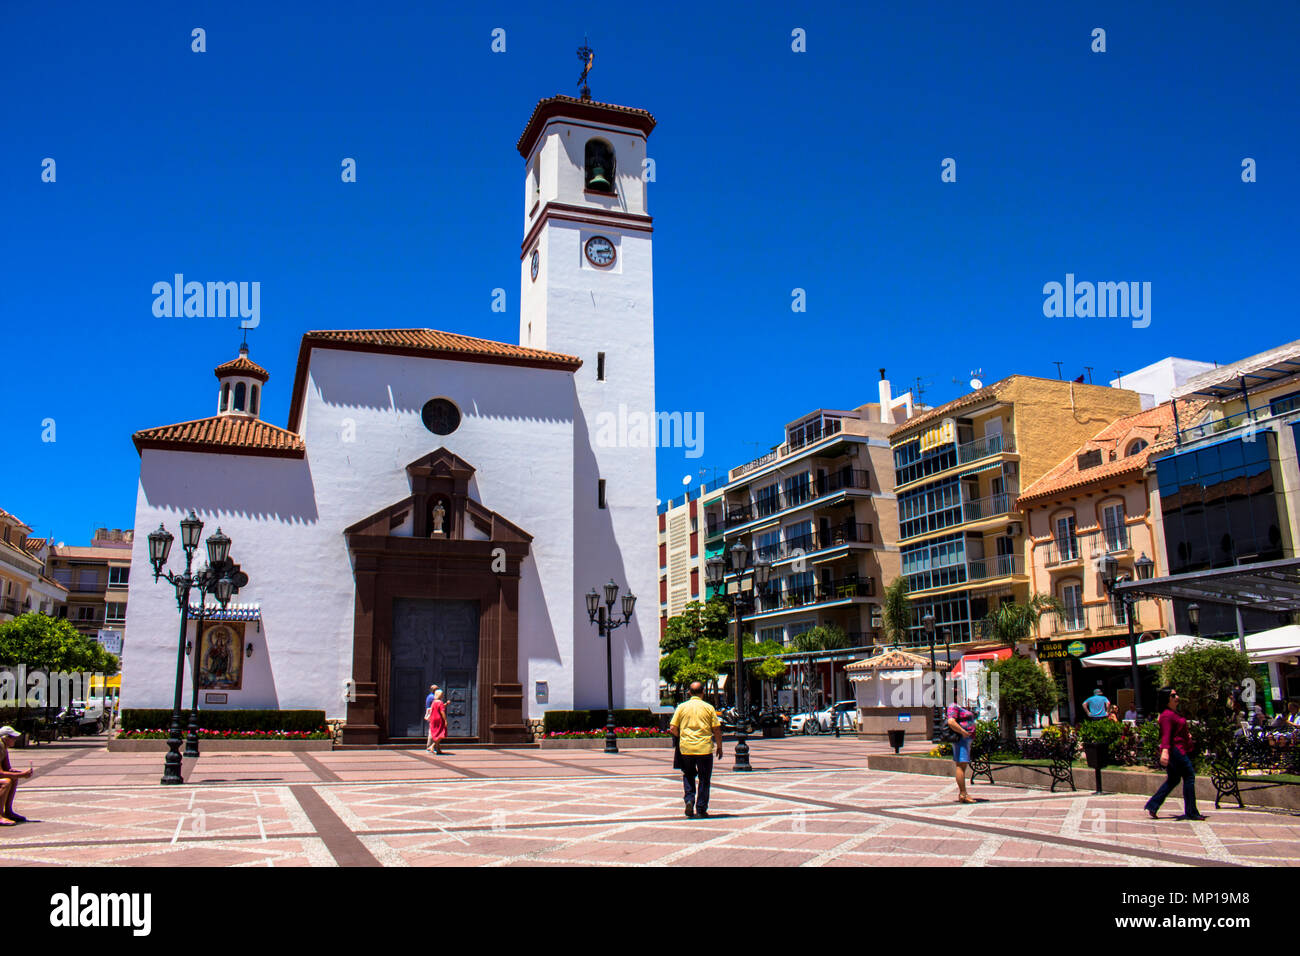 Church. ¨Parroquia de Nuestra Señora del Carmen¨ in Fuengirola. Malaga province, Andalusia, Spain. Picture taken – 15 may 2018. Stock Photo